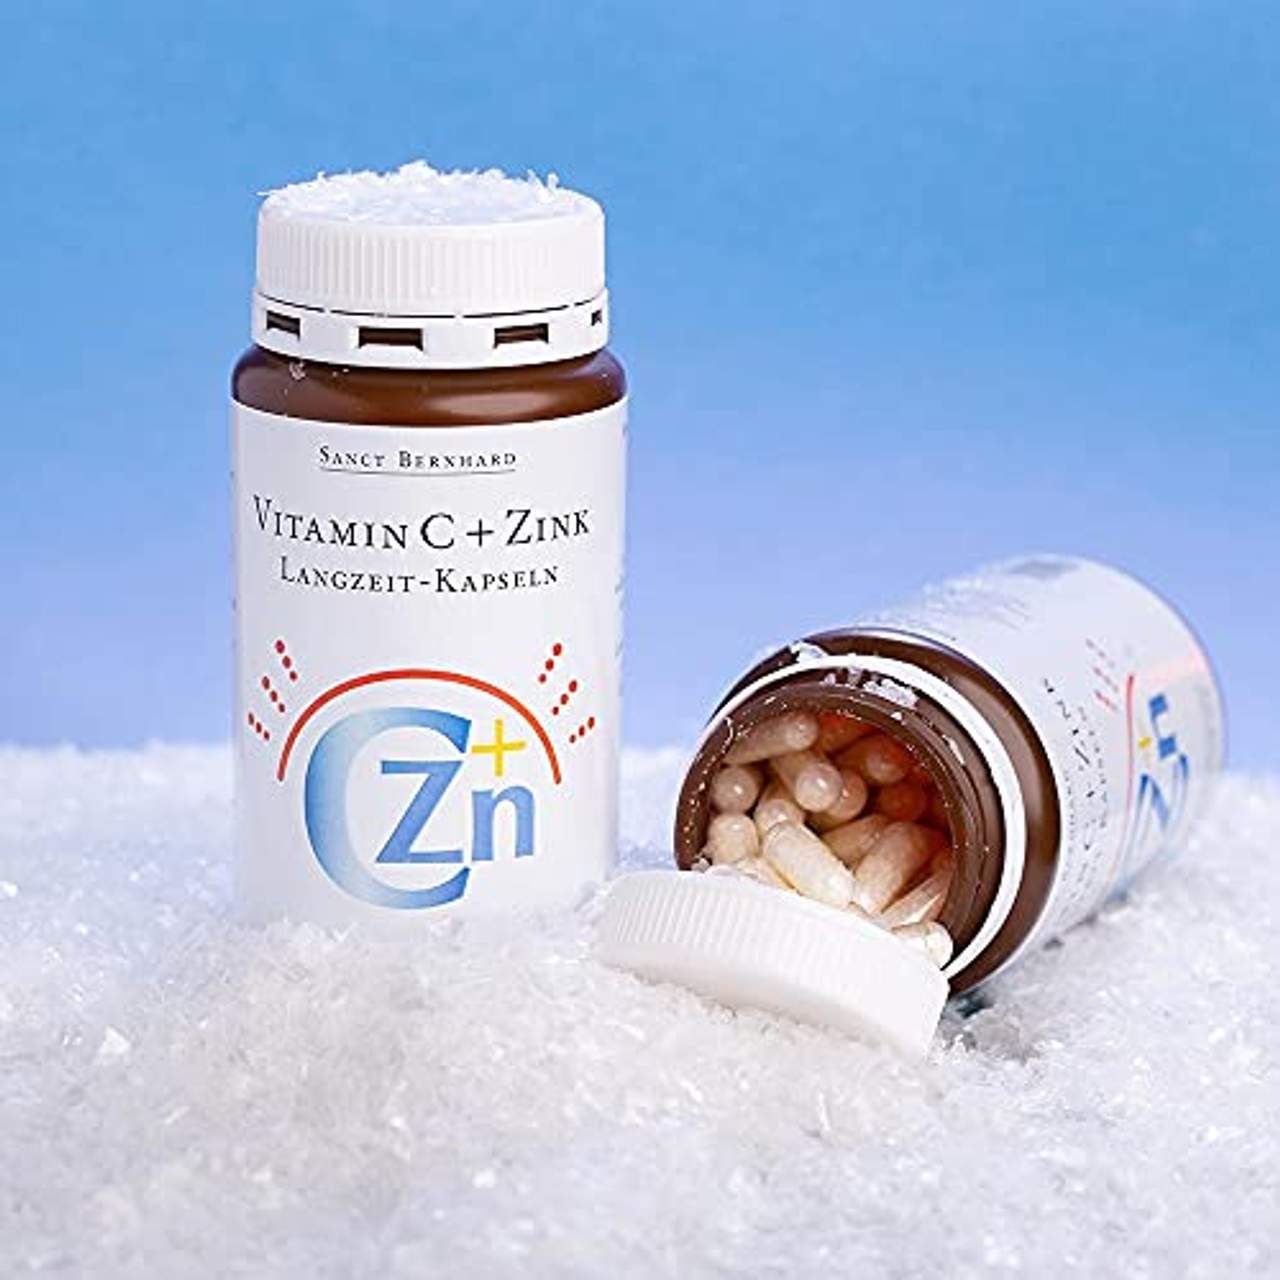 Vitamin C+ Zink Langzeit-Kapseln